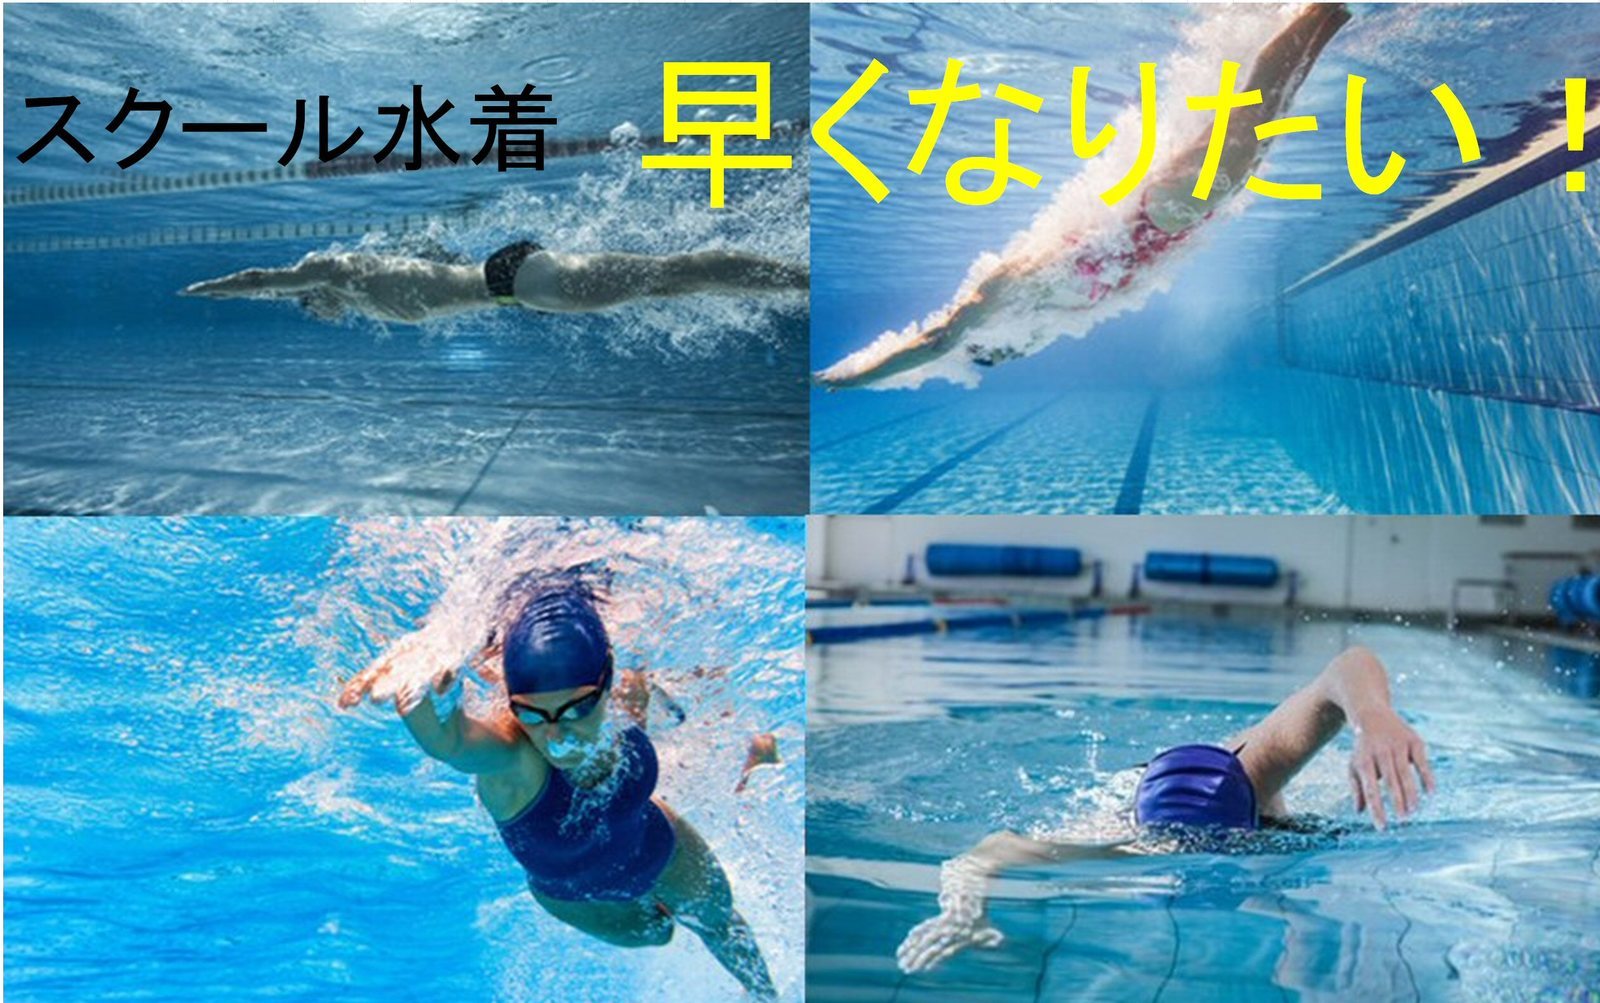 LADY'S 日本製 フットマーク スクール 水着 セパレーツ下 ロングタイプ型番 101571 5L ネイビー 紺 競泳型 女子 小学生 中学生 日本体育連盟推薦 【FOOT MARK】